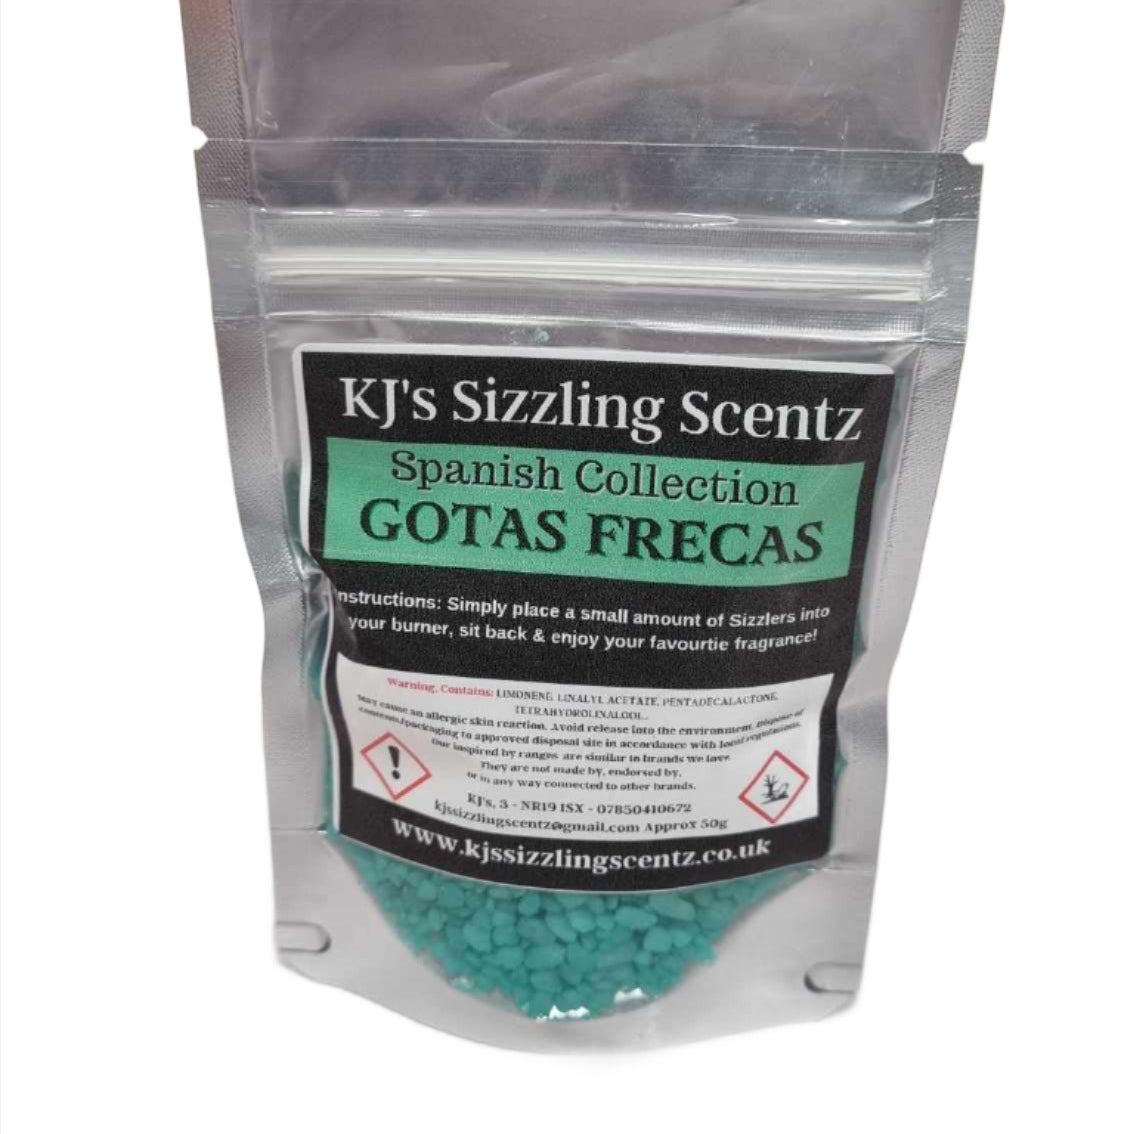 Spanish Fragranced Sizzlers - Gotas Frecas KJ's Sizzling Scentz